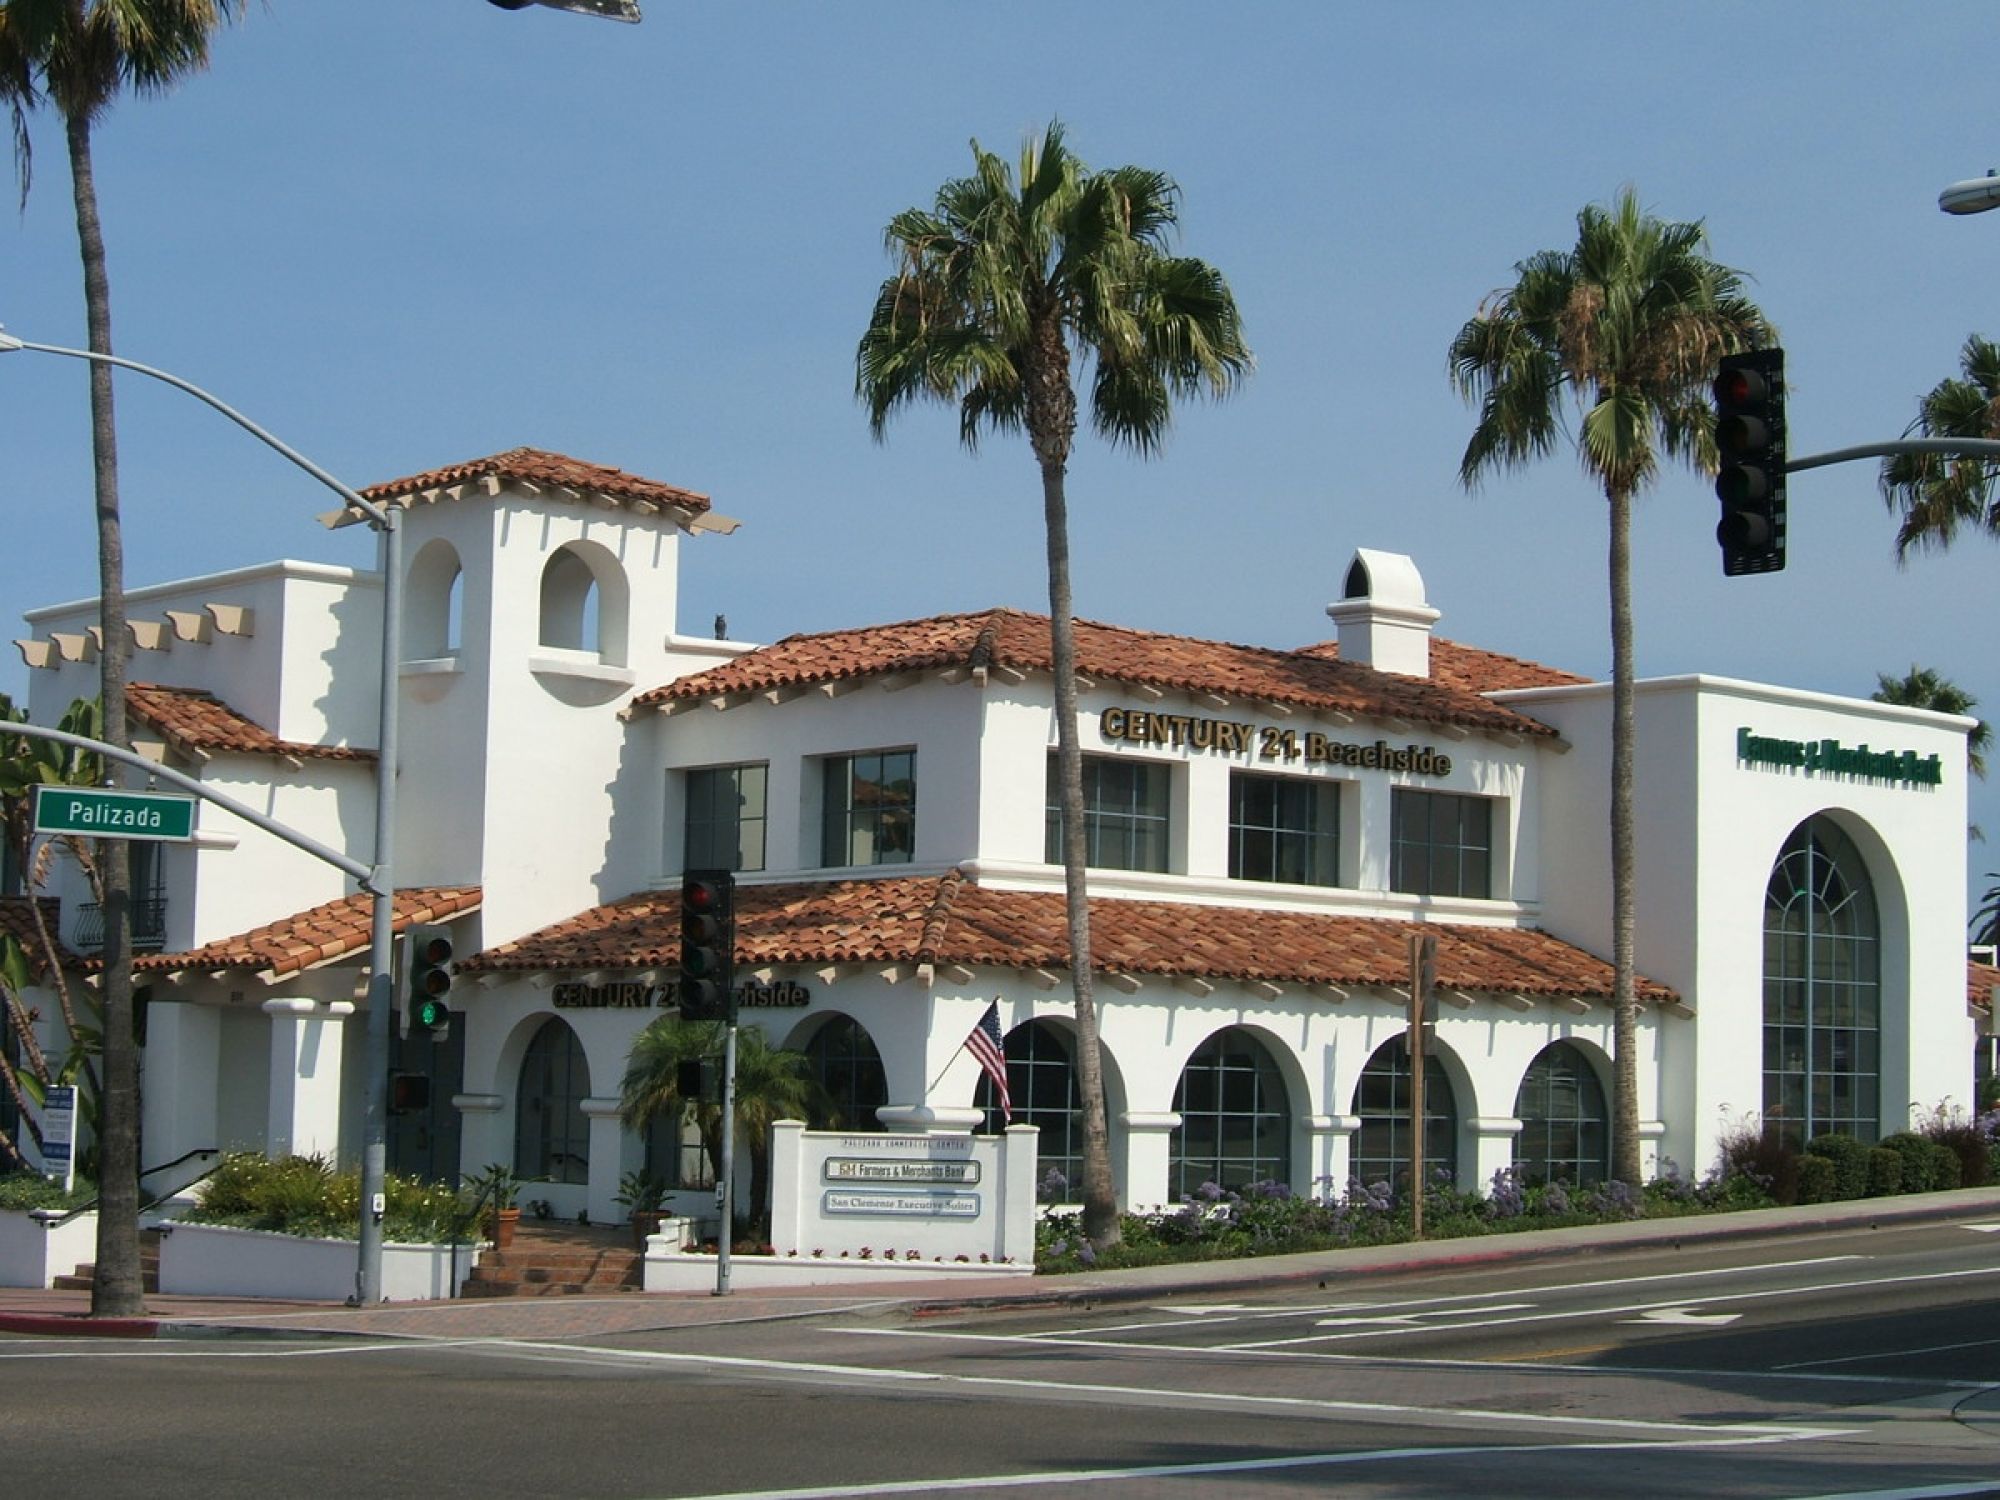 San Clemente Insurance Services - About Us